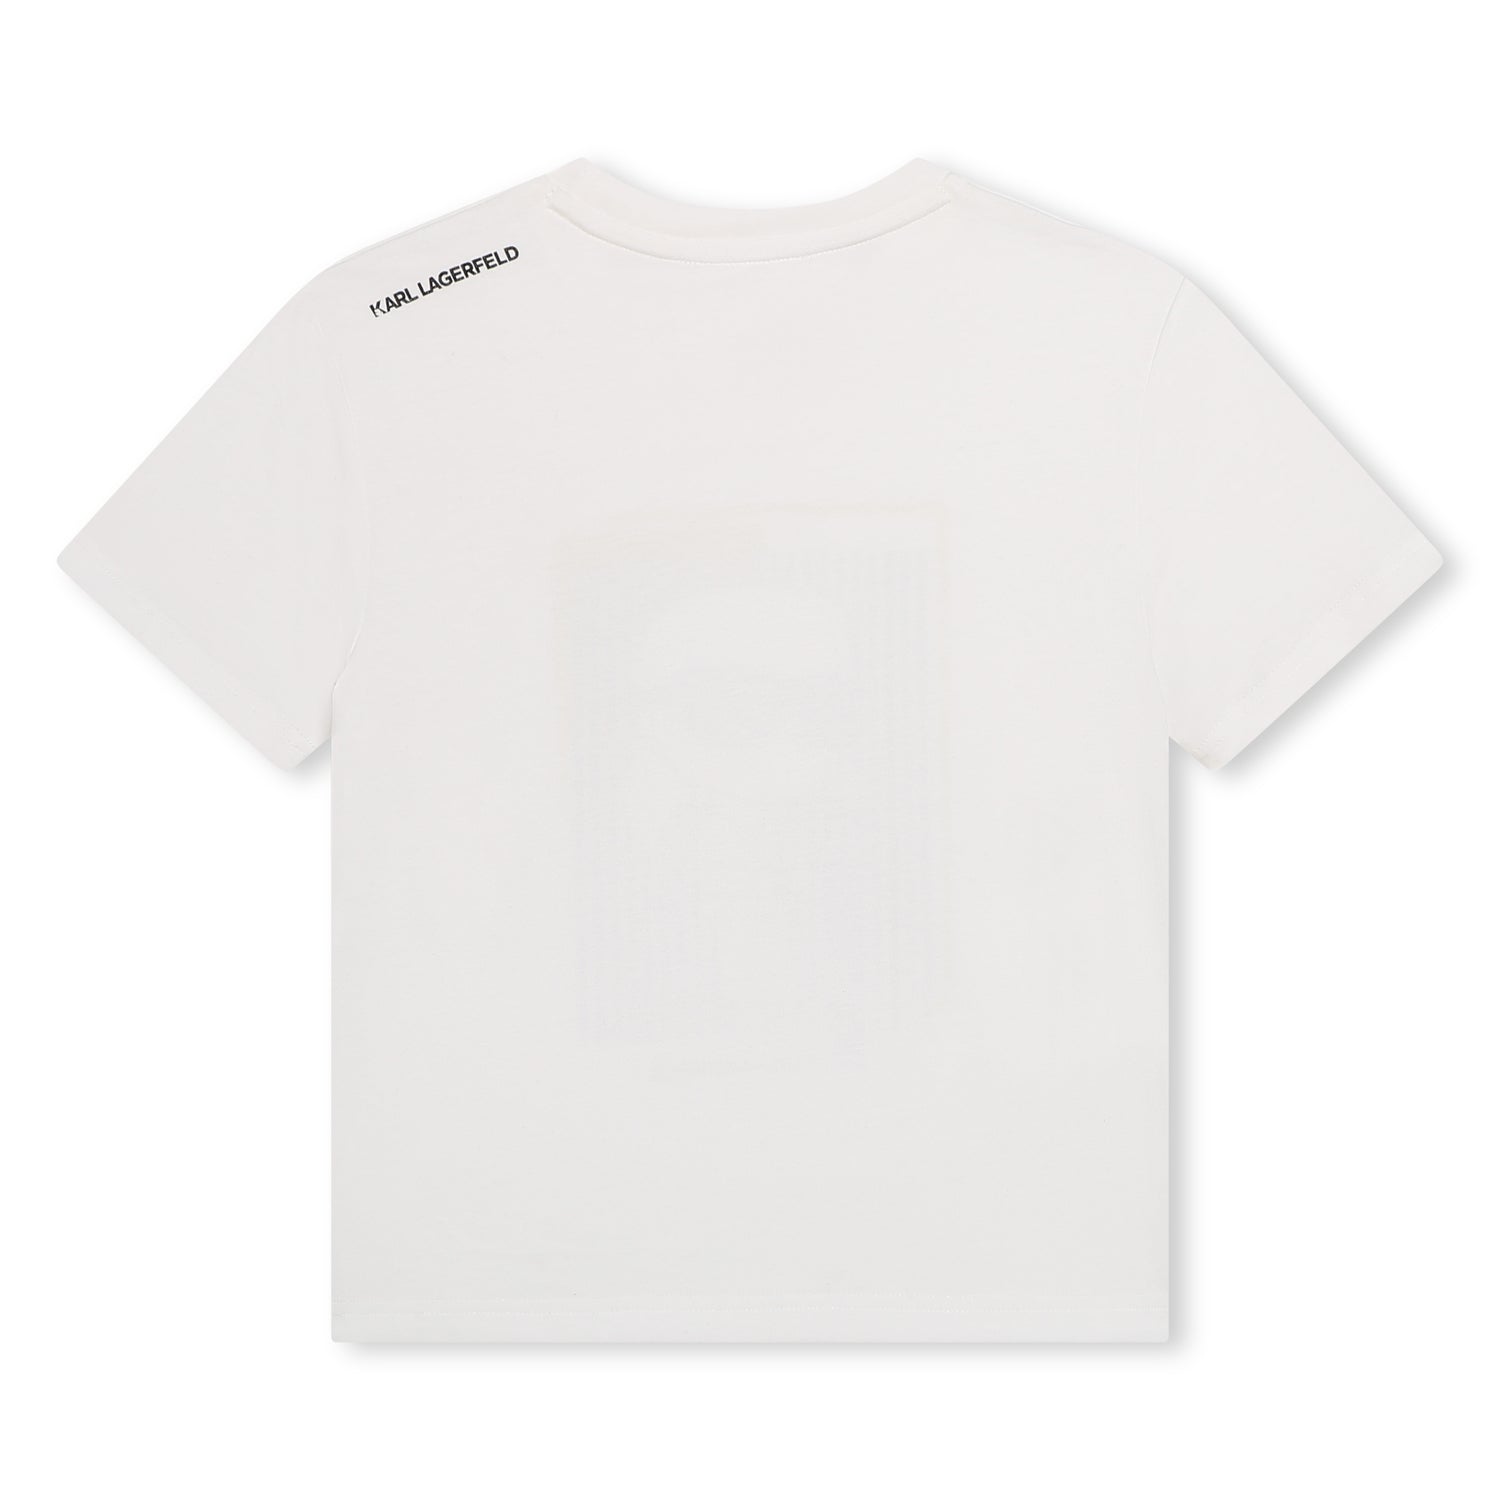 Karl Lagerfeld White with Logo Graphic Tee Shirt